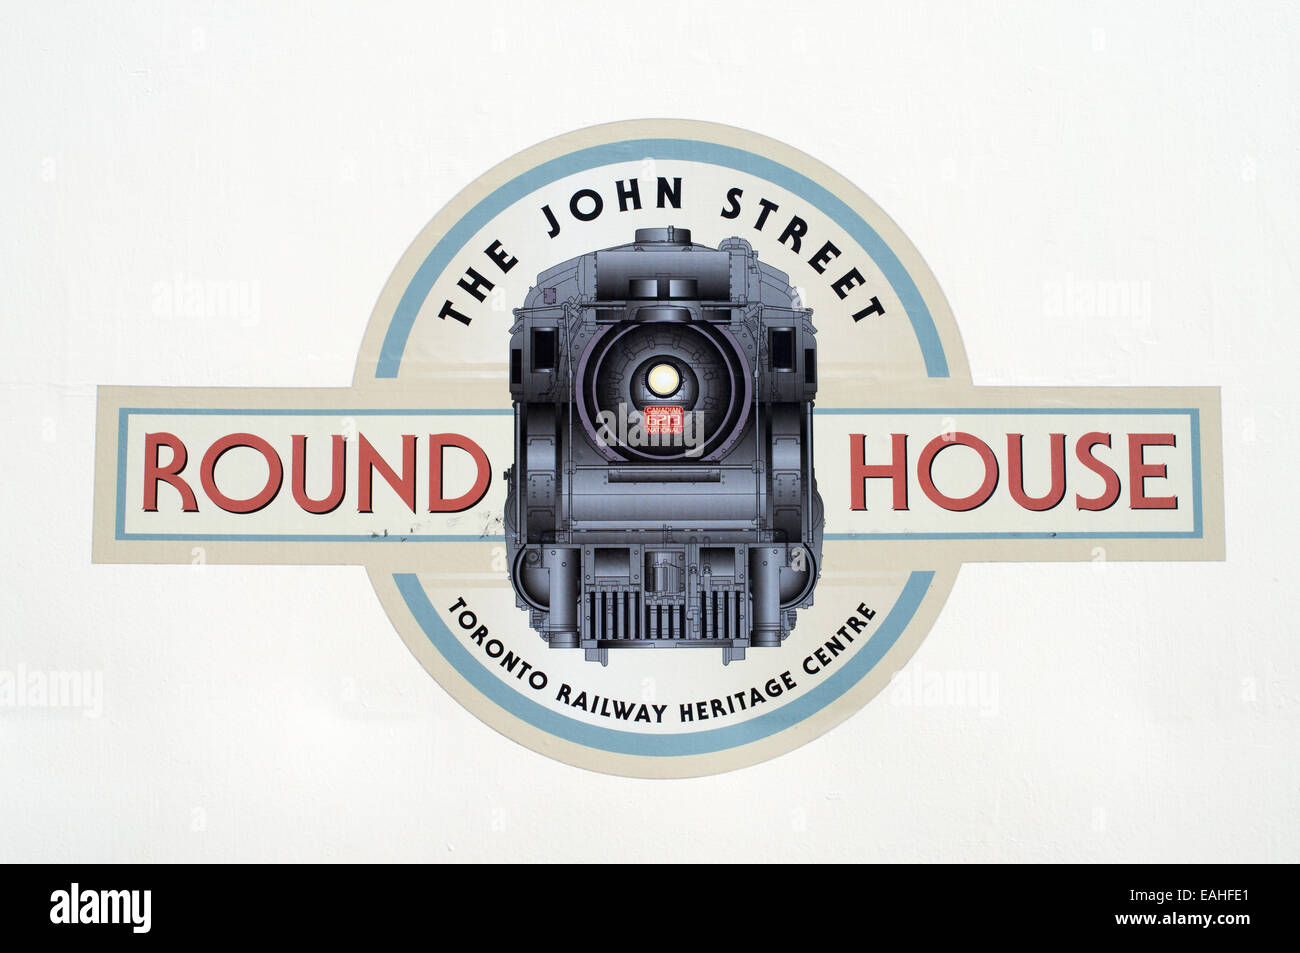 The John Street Roundhouse Toronto Railway Heritage Centre logo Toronto, Ontario, Canada Stock Photo